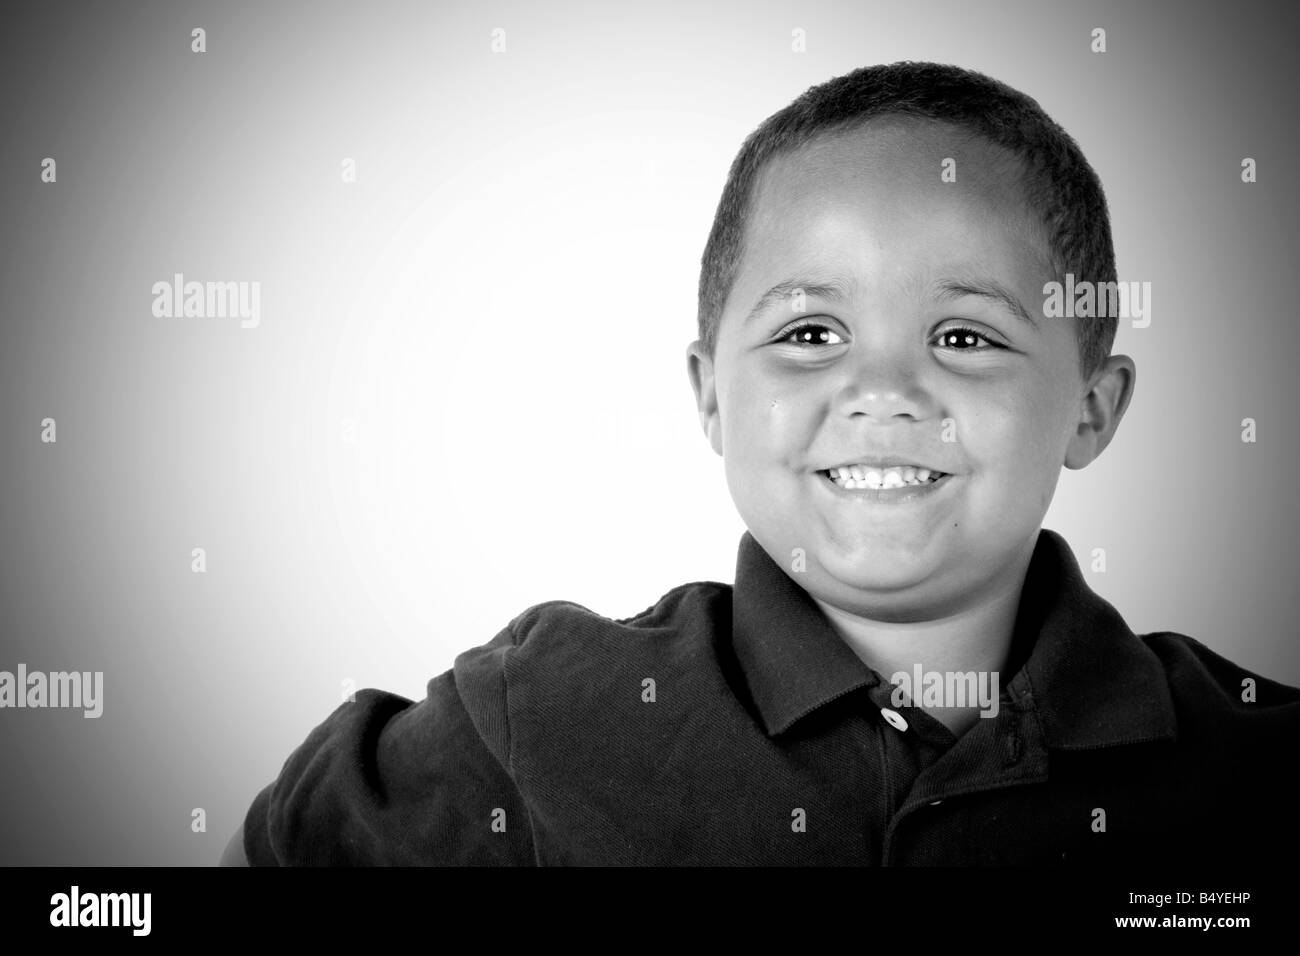 Happy latino boy portrait in black and white Stock Photo